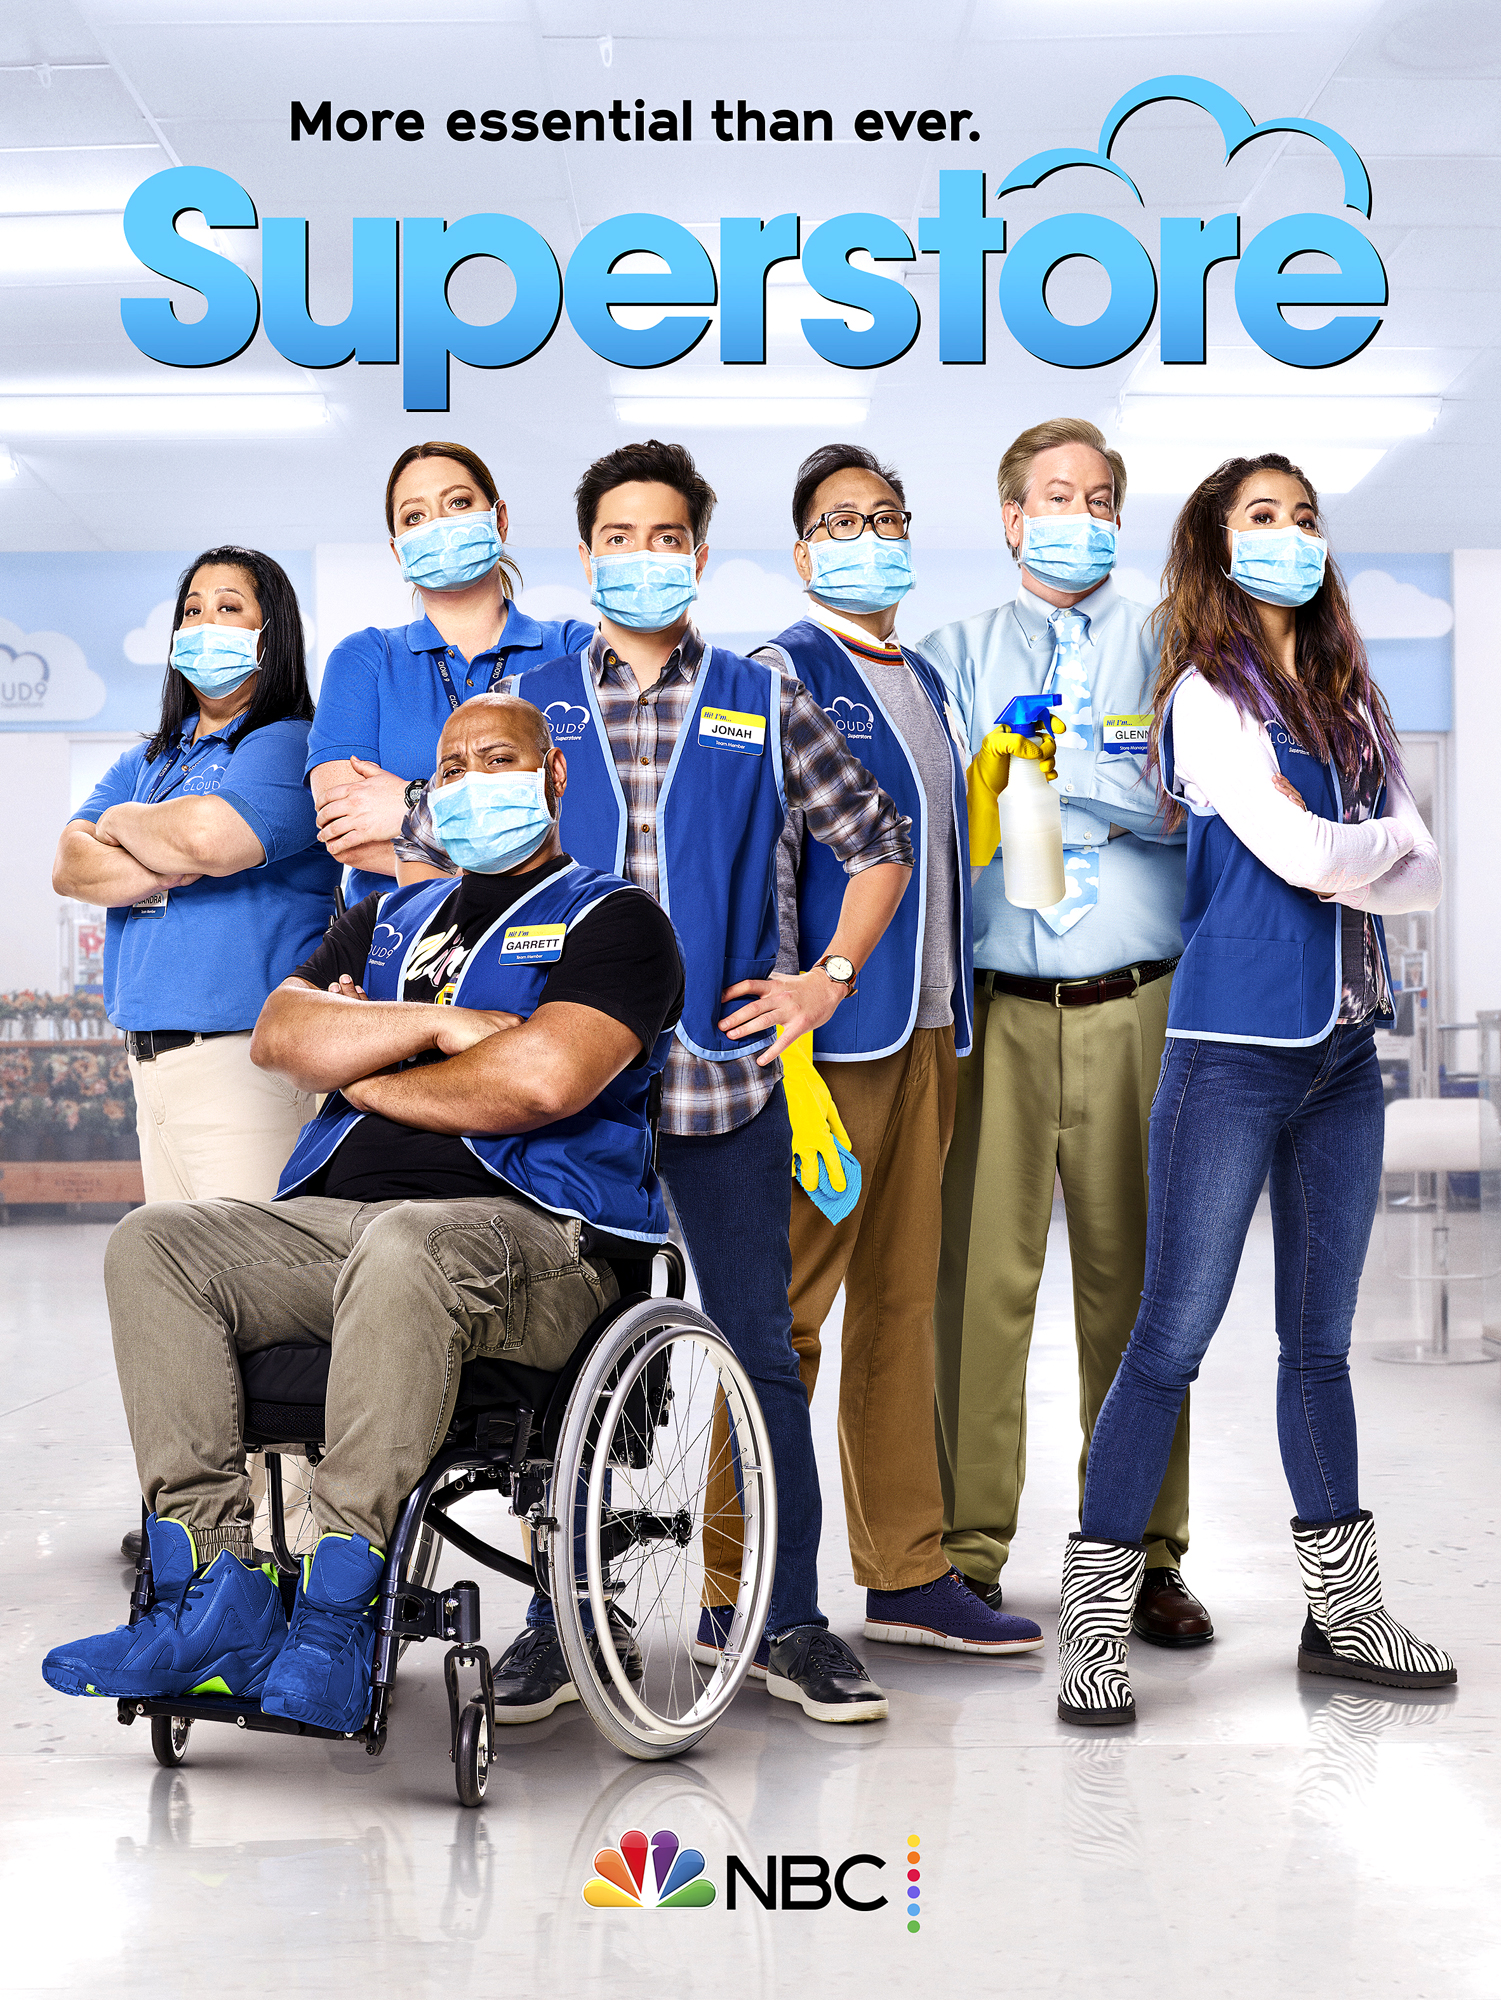 Superstore season 3 finale recap: This is one of TV's best comedies - Vox